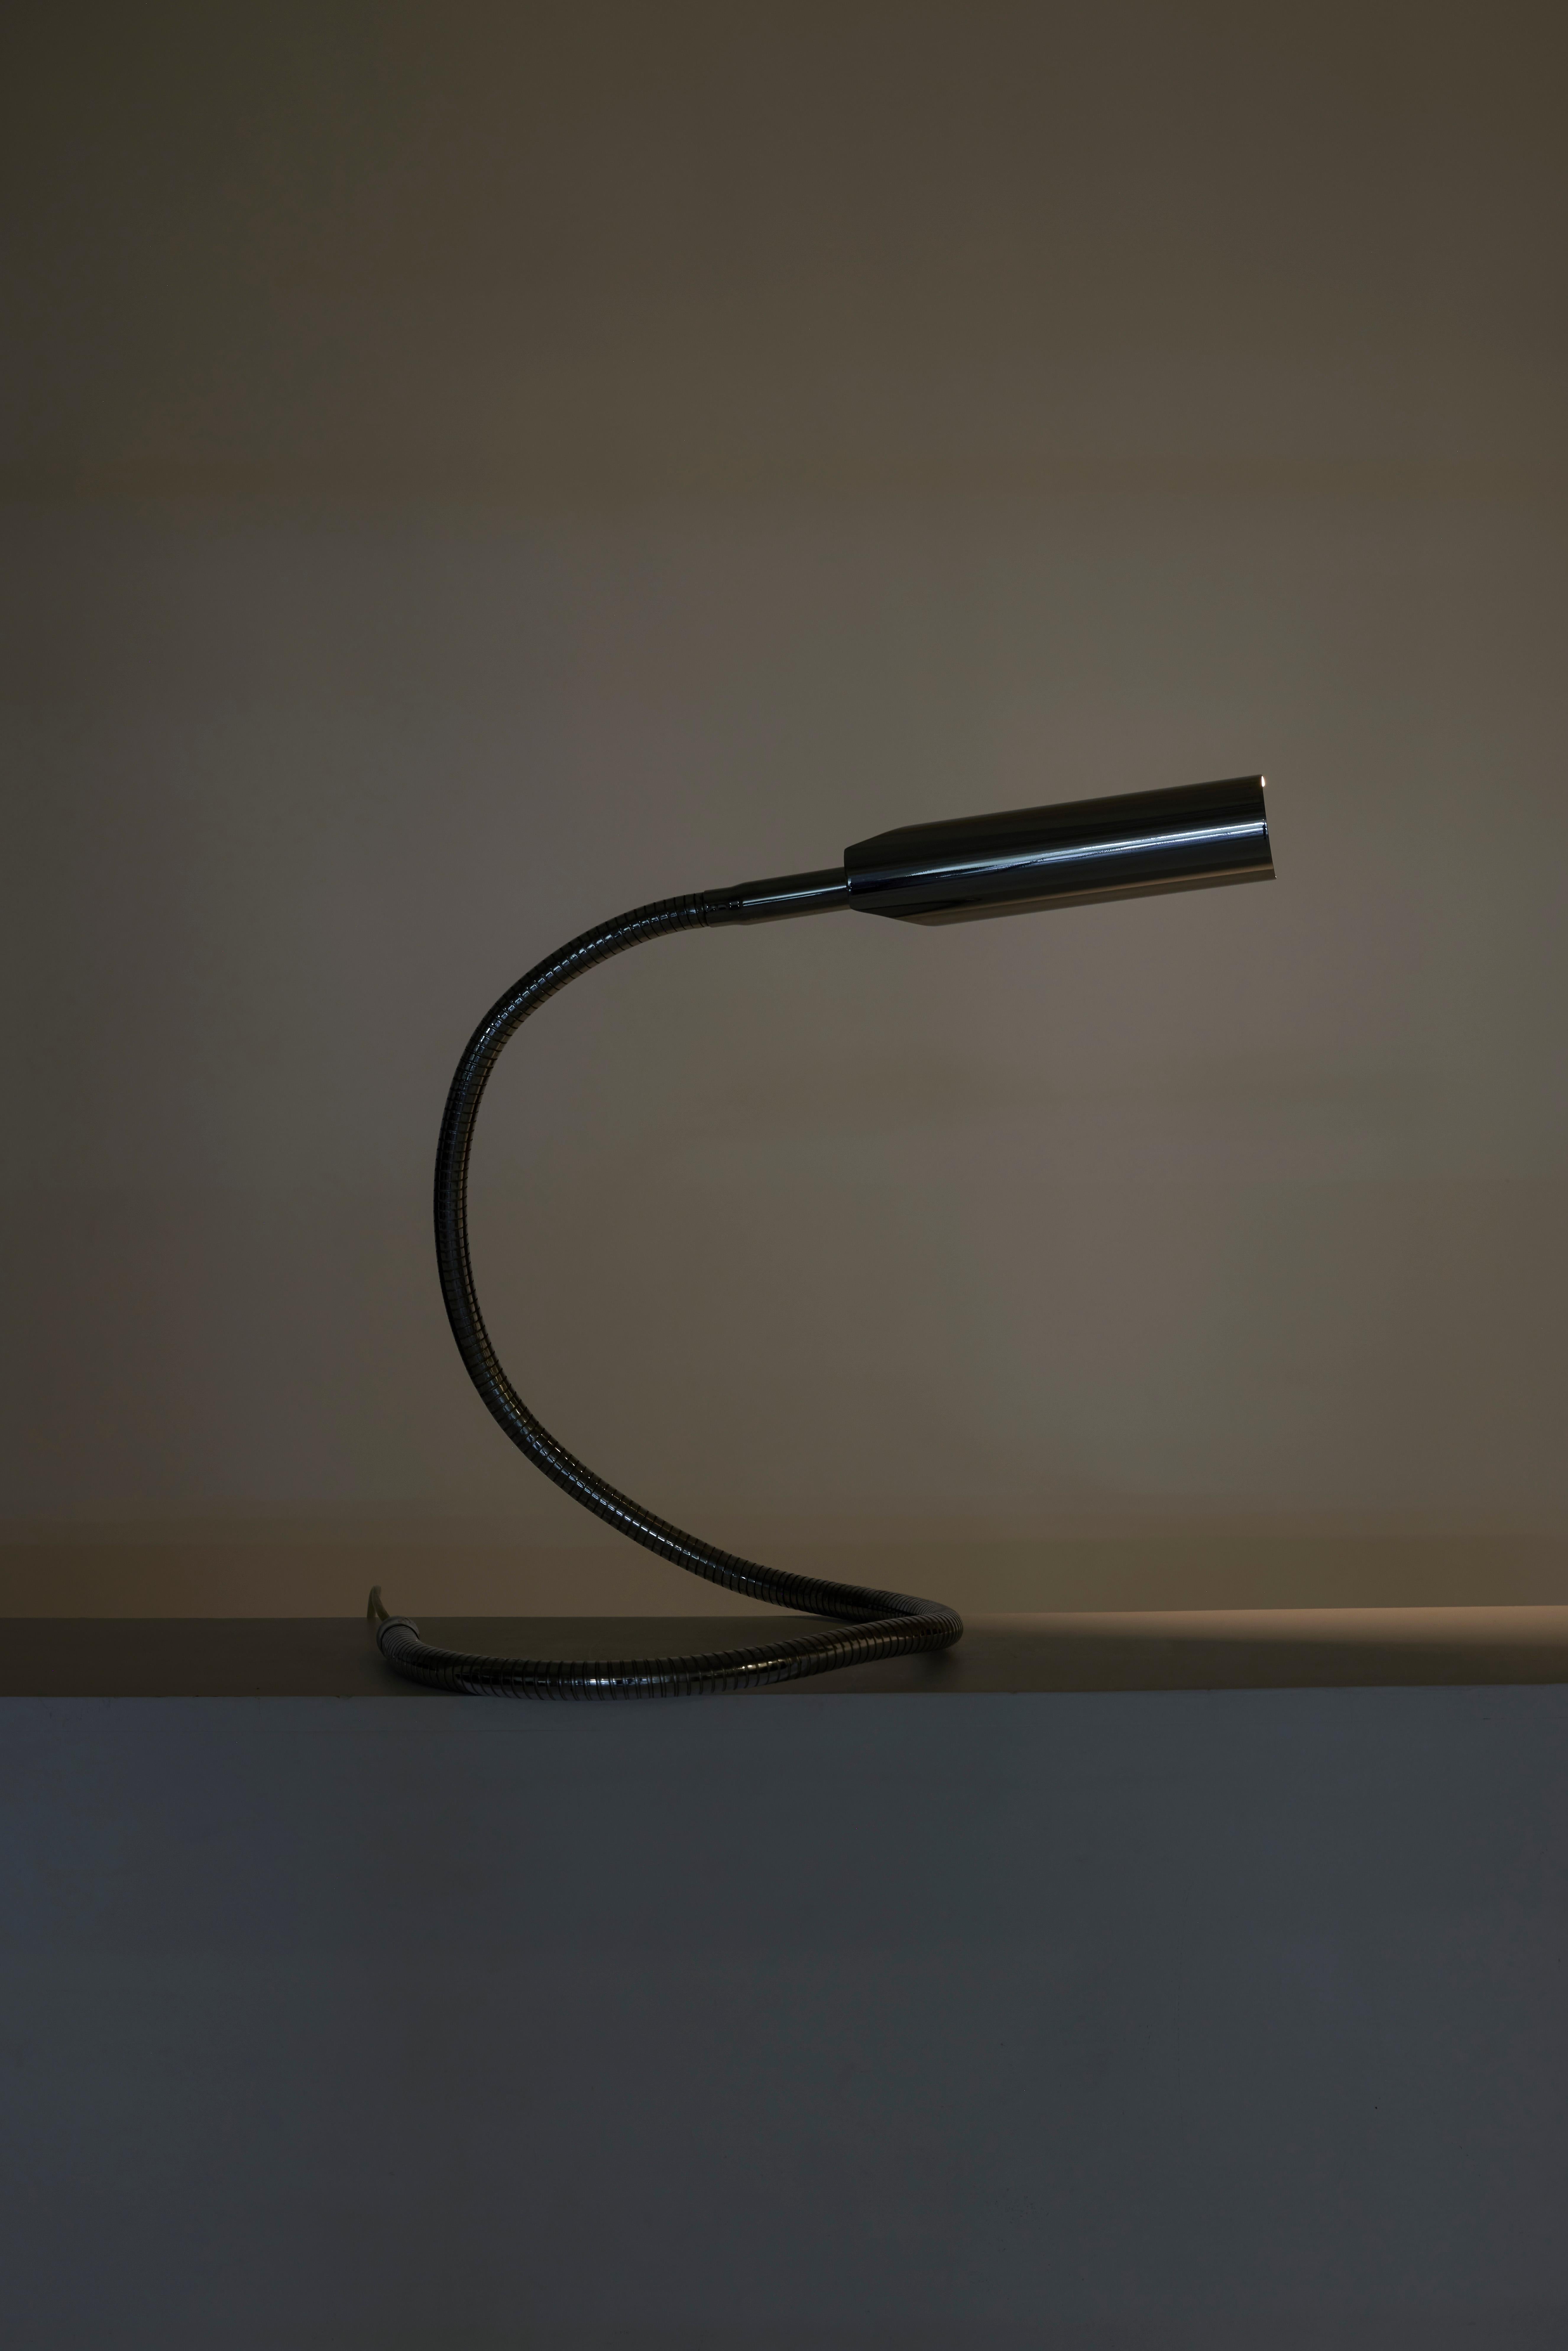 Aluminum lamp by the french designer Etienne Fermigier For Sale 6